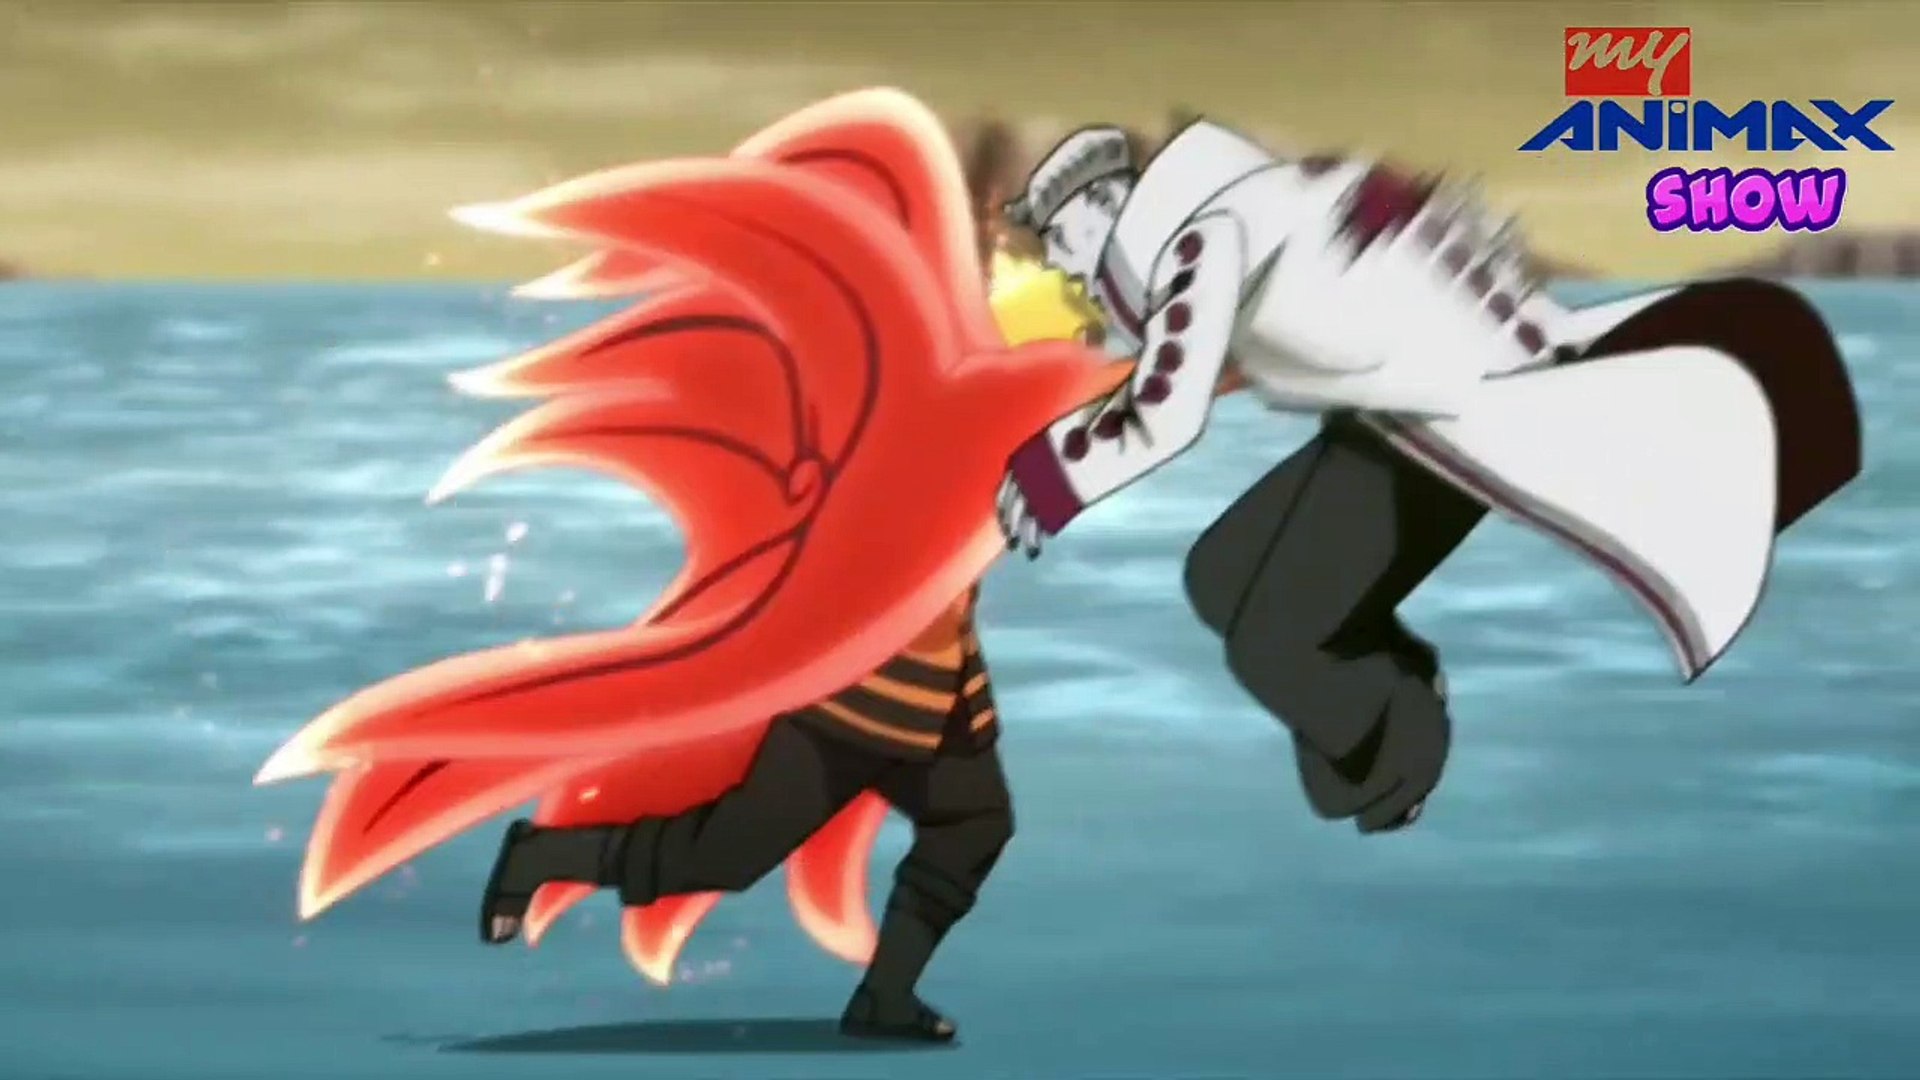 which fight to you guys prefer? barhon mode vs isshiki or naruto and sasuke vs  momoshiki? : r/Boruto